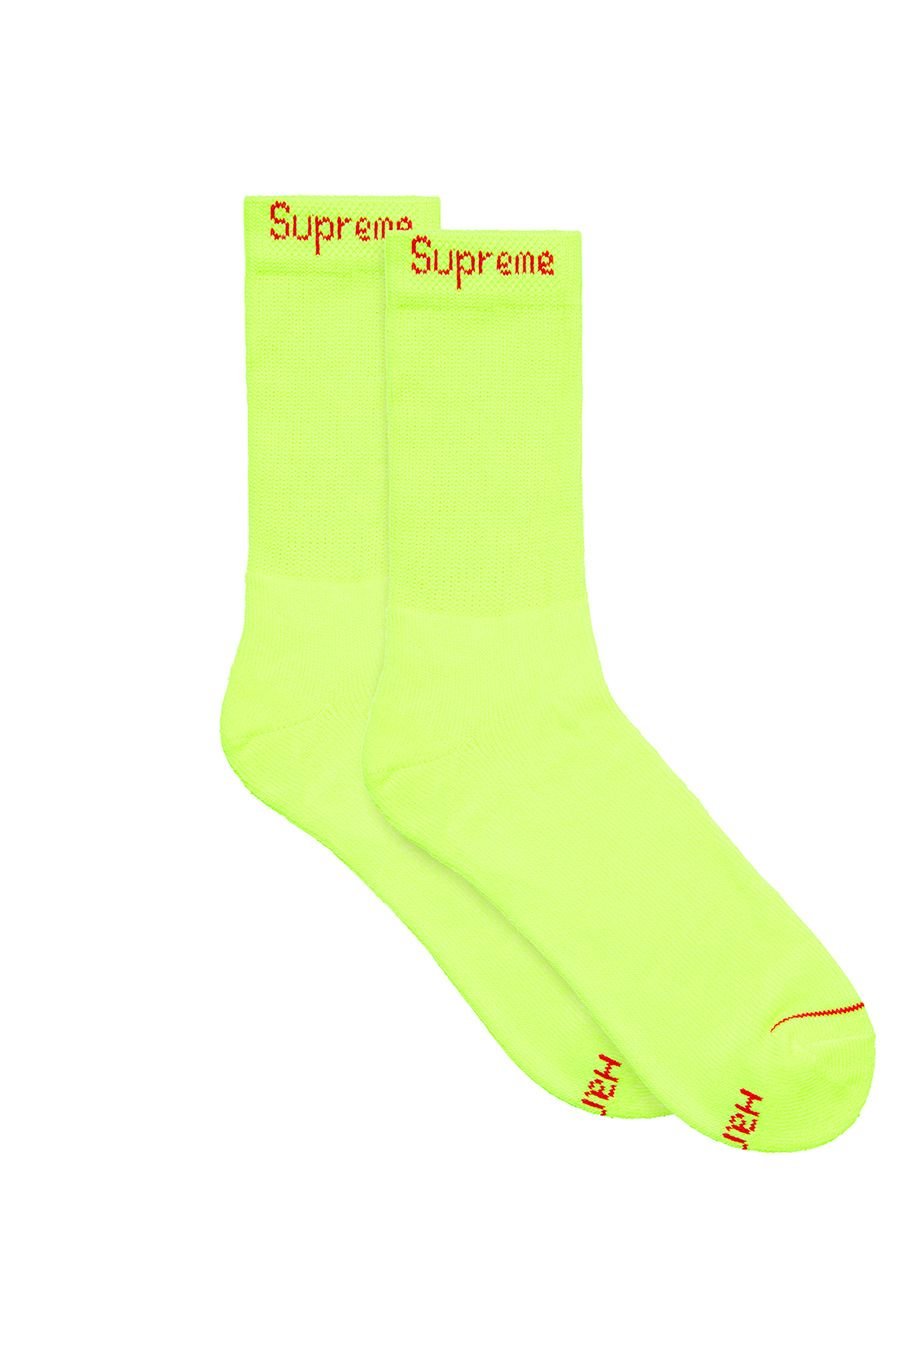 supreme 靴下 黄色 2p - ソックス